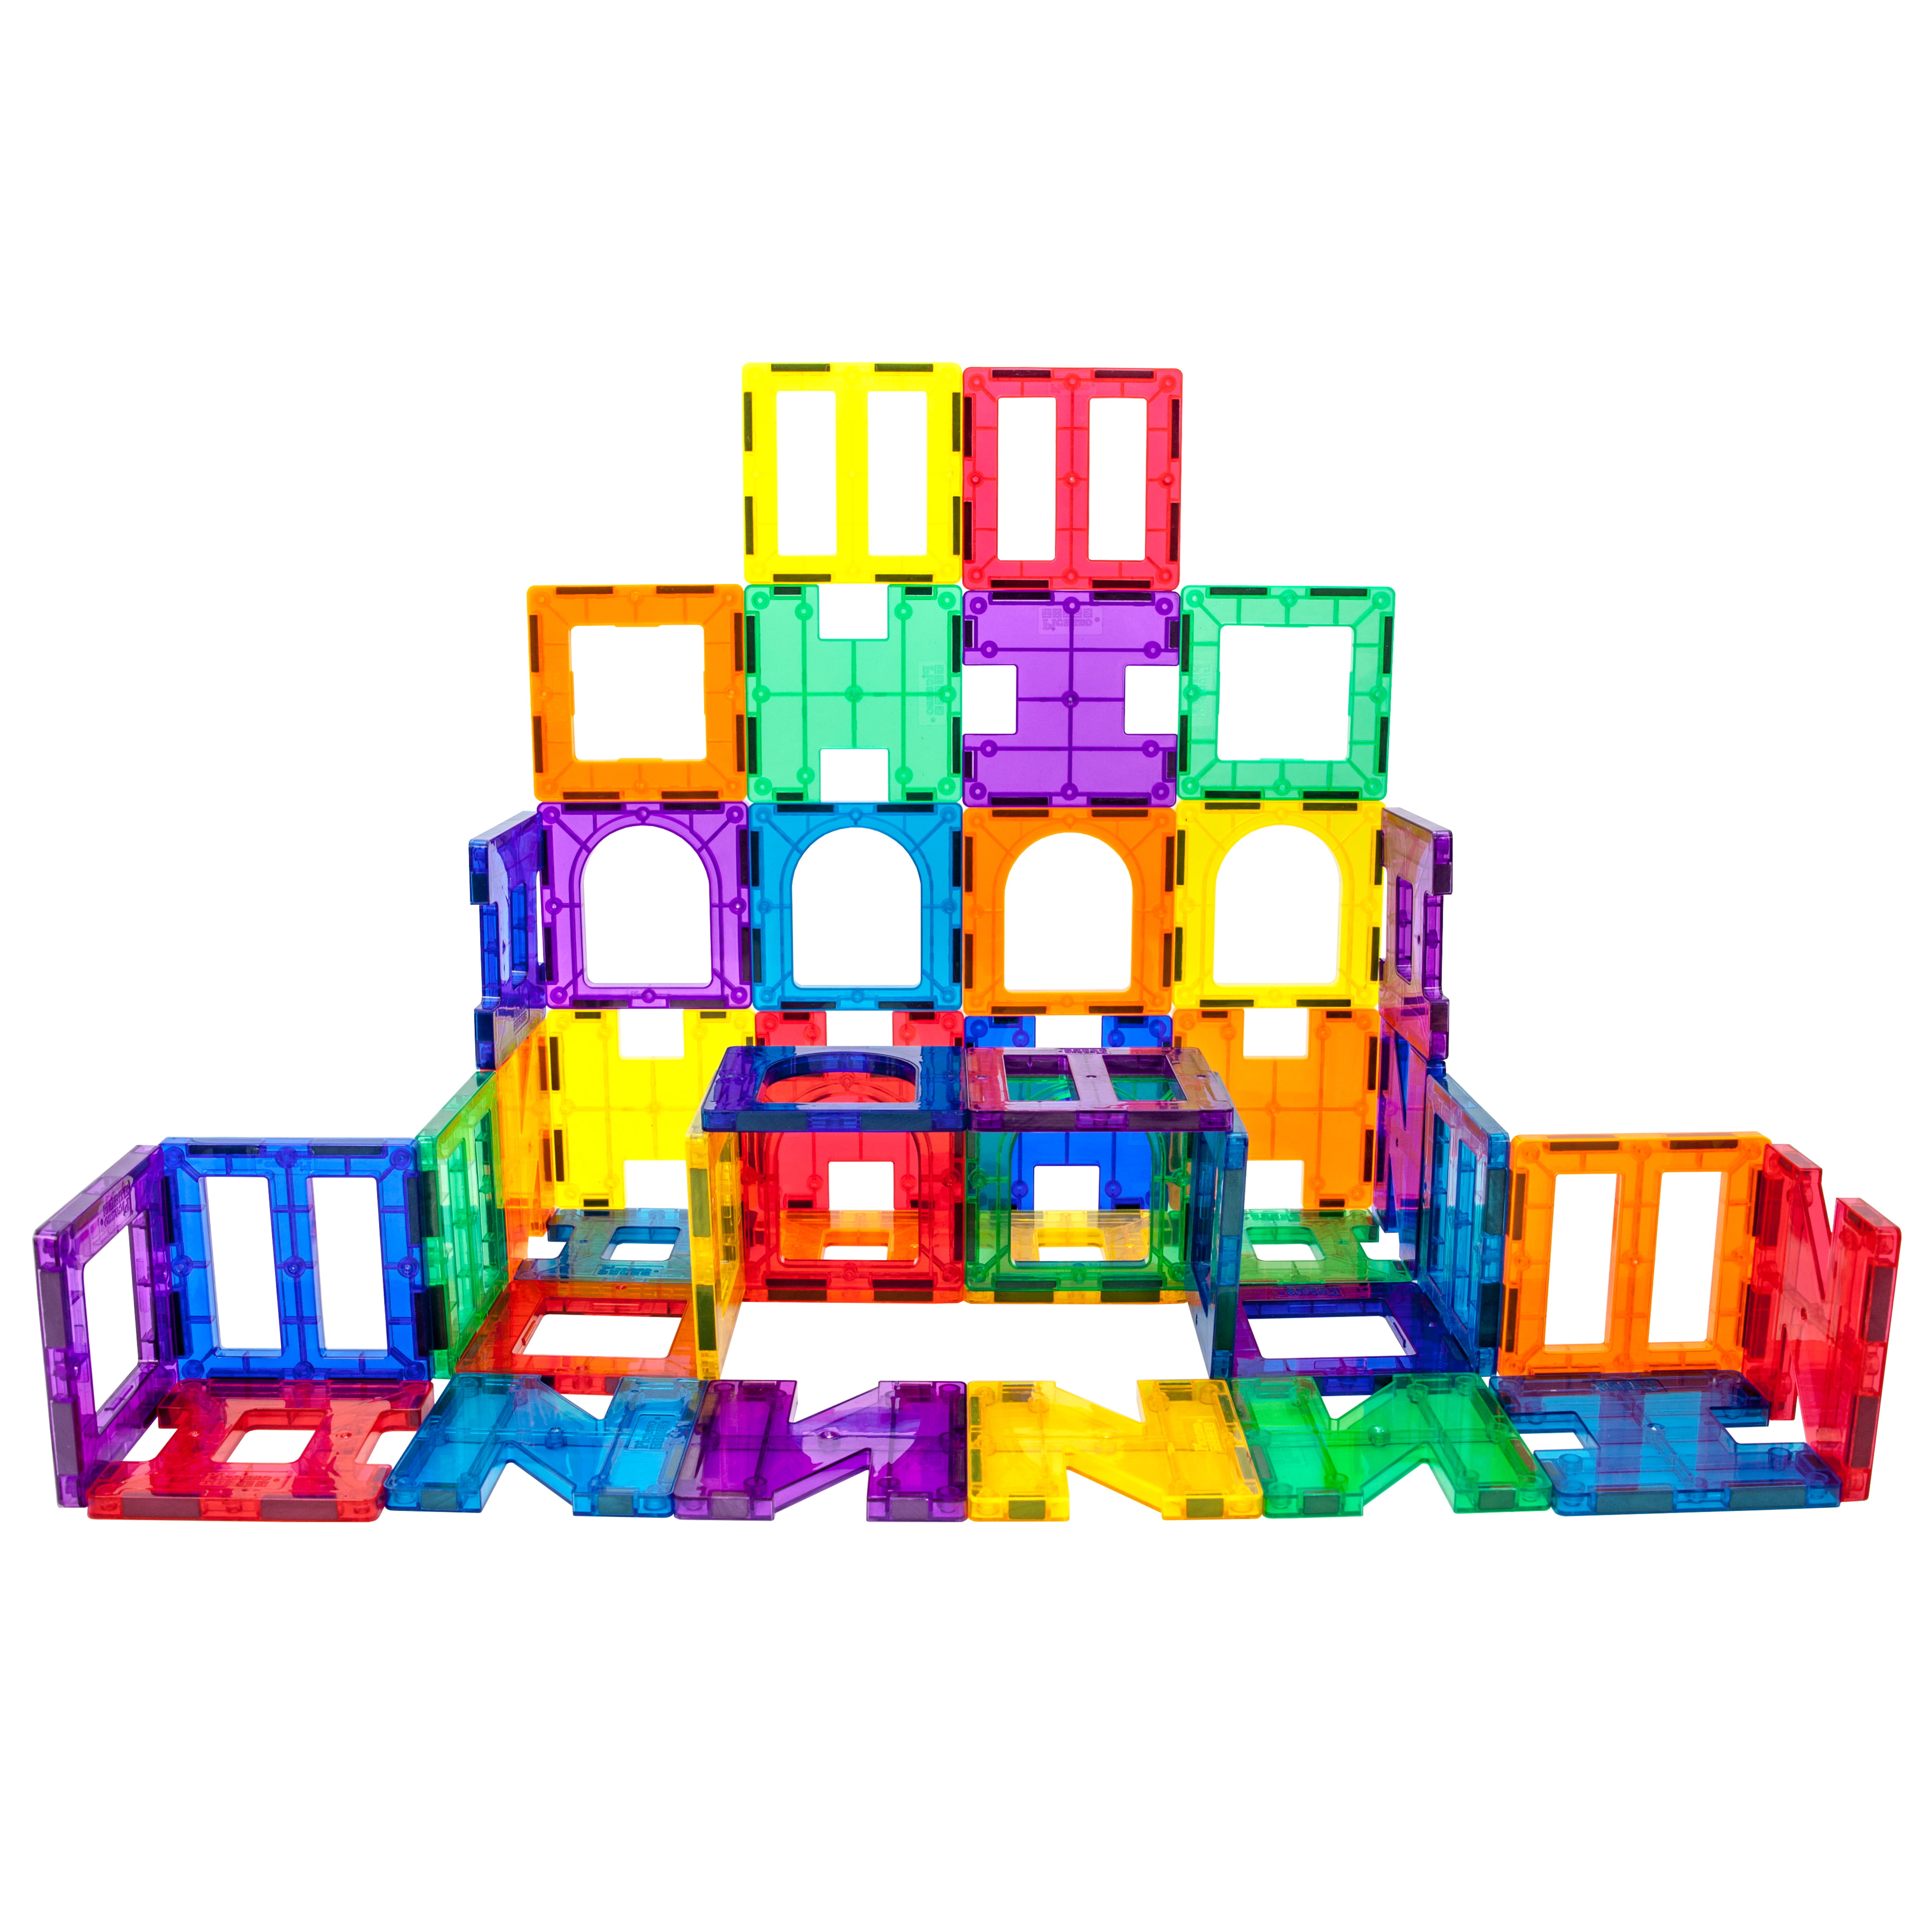 Magnetic playmags Toddler Learning Toys Set,100 Pcs Hobaby Magnet Blocks Building Tiles 3D Toys for Kids STEM Learning Playset